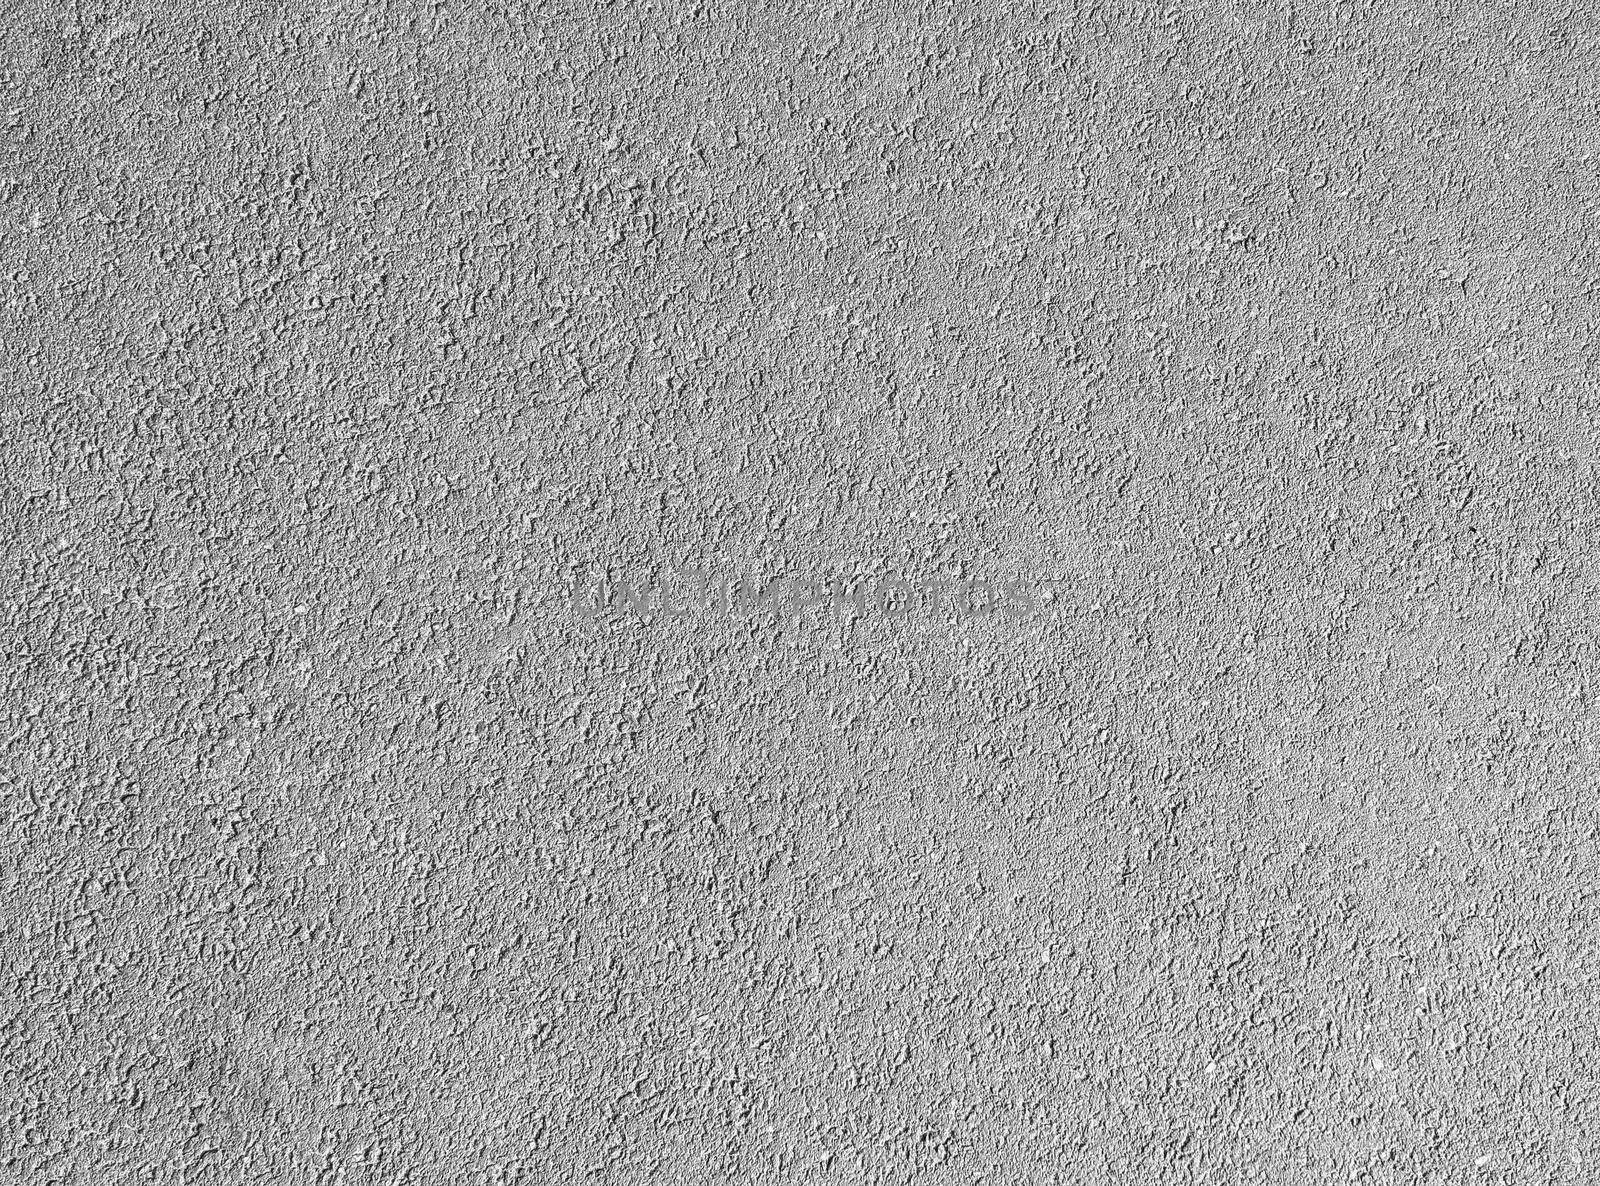 Surface grunge rough of asphalt, Tarmac grey grainy road, Texture Background